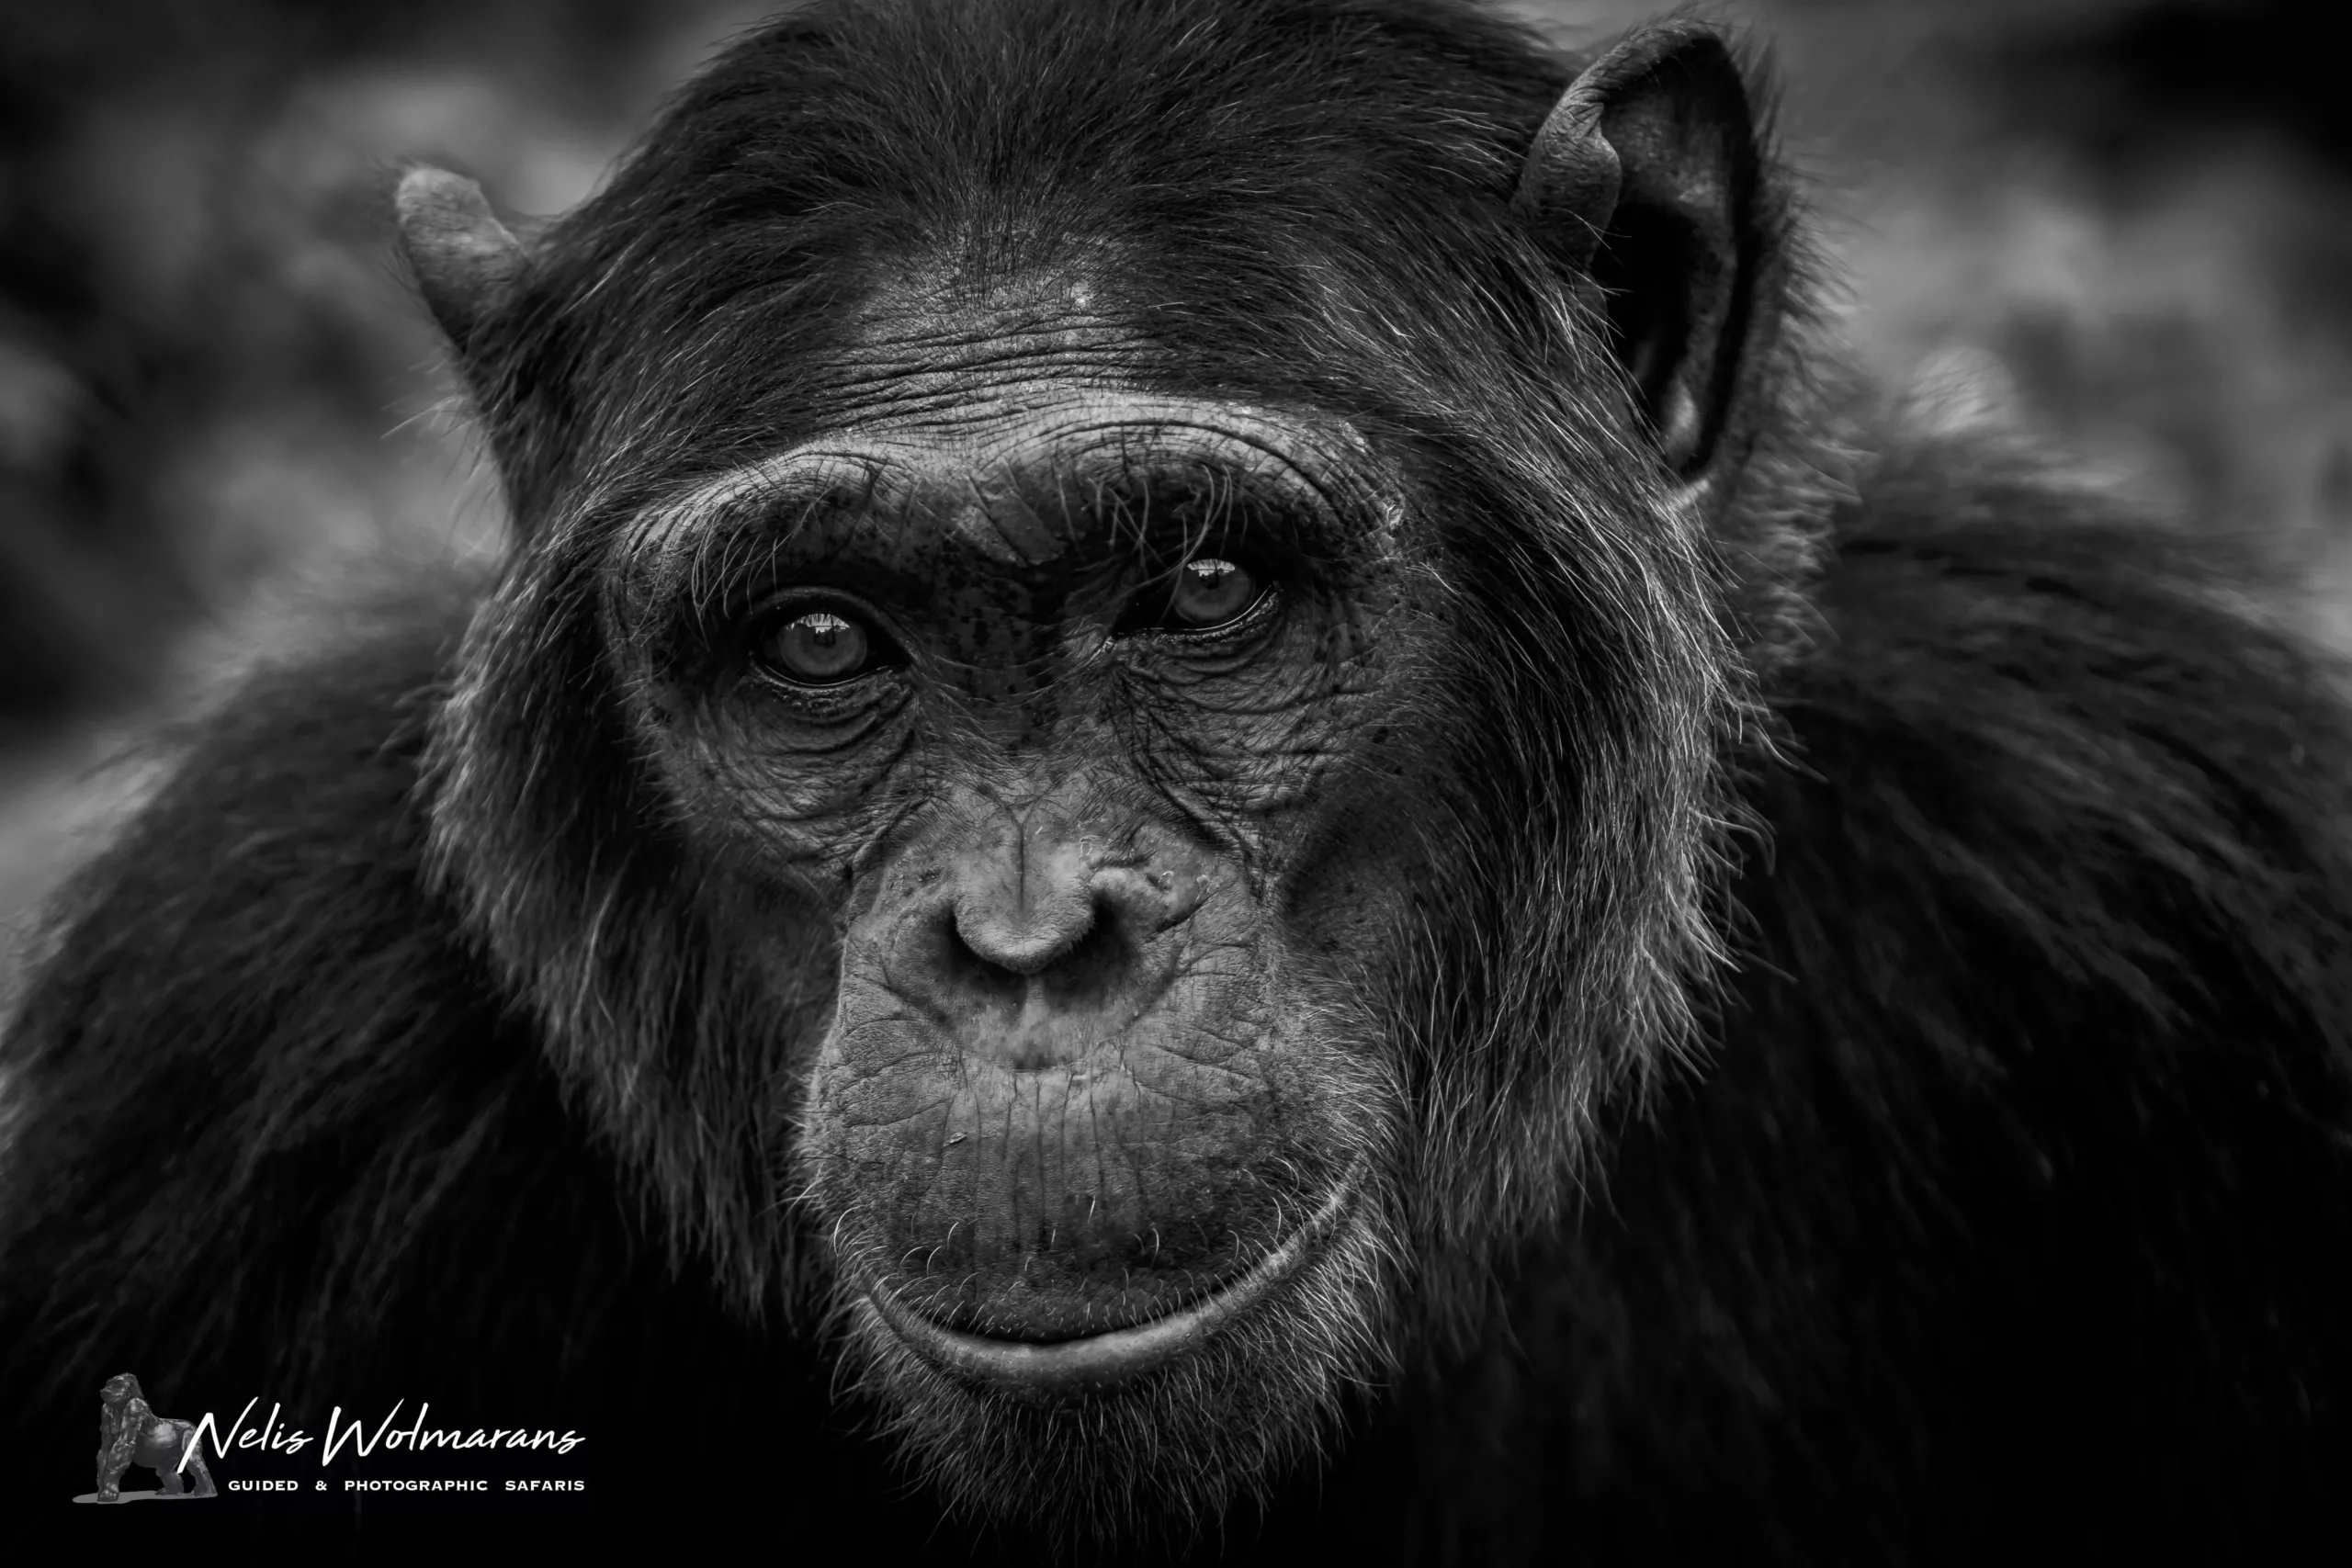 Black & white gorilla trekking photography by Nelis Wolmarans